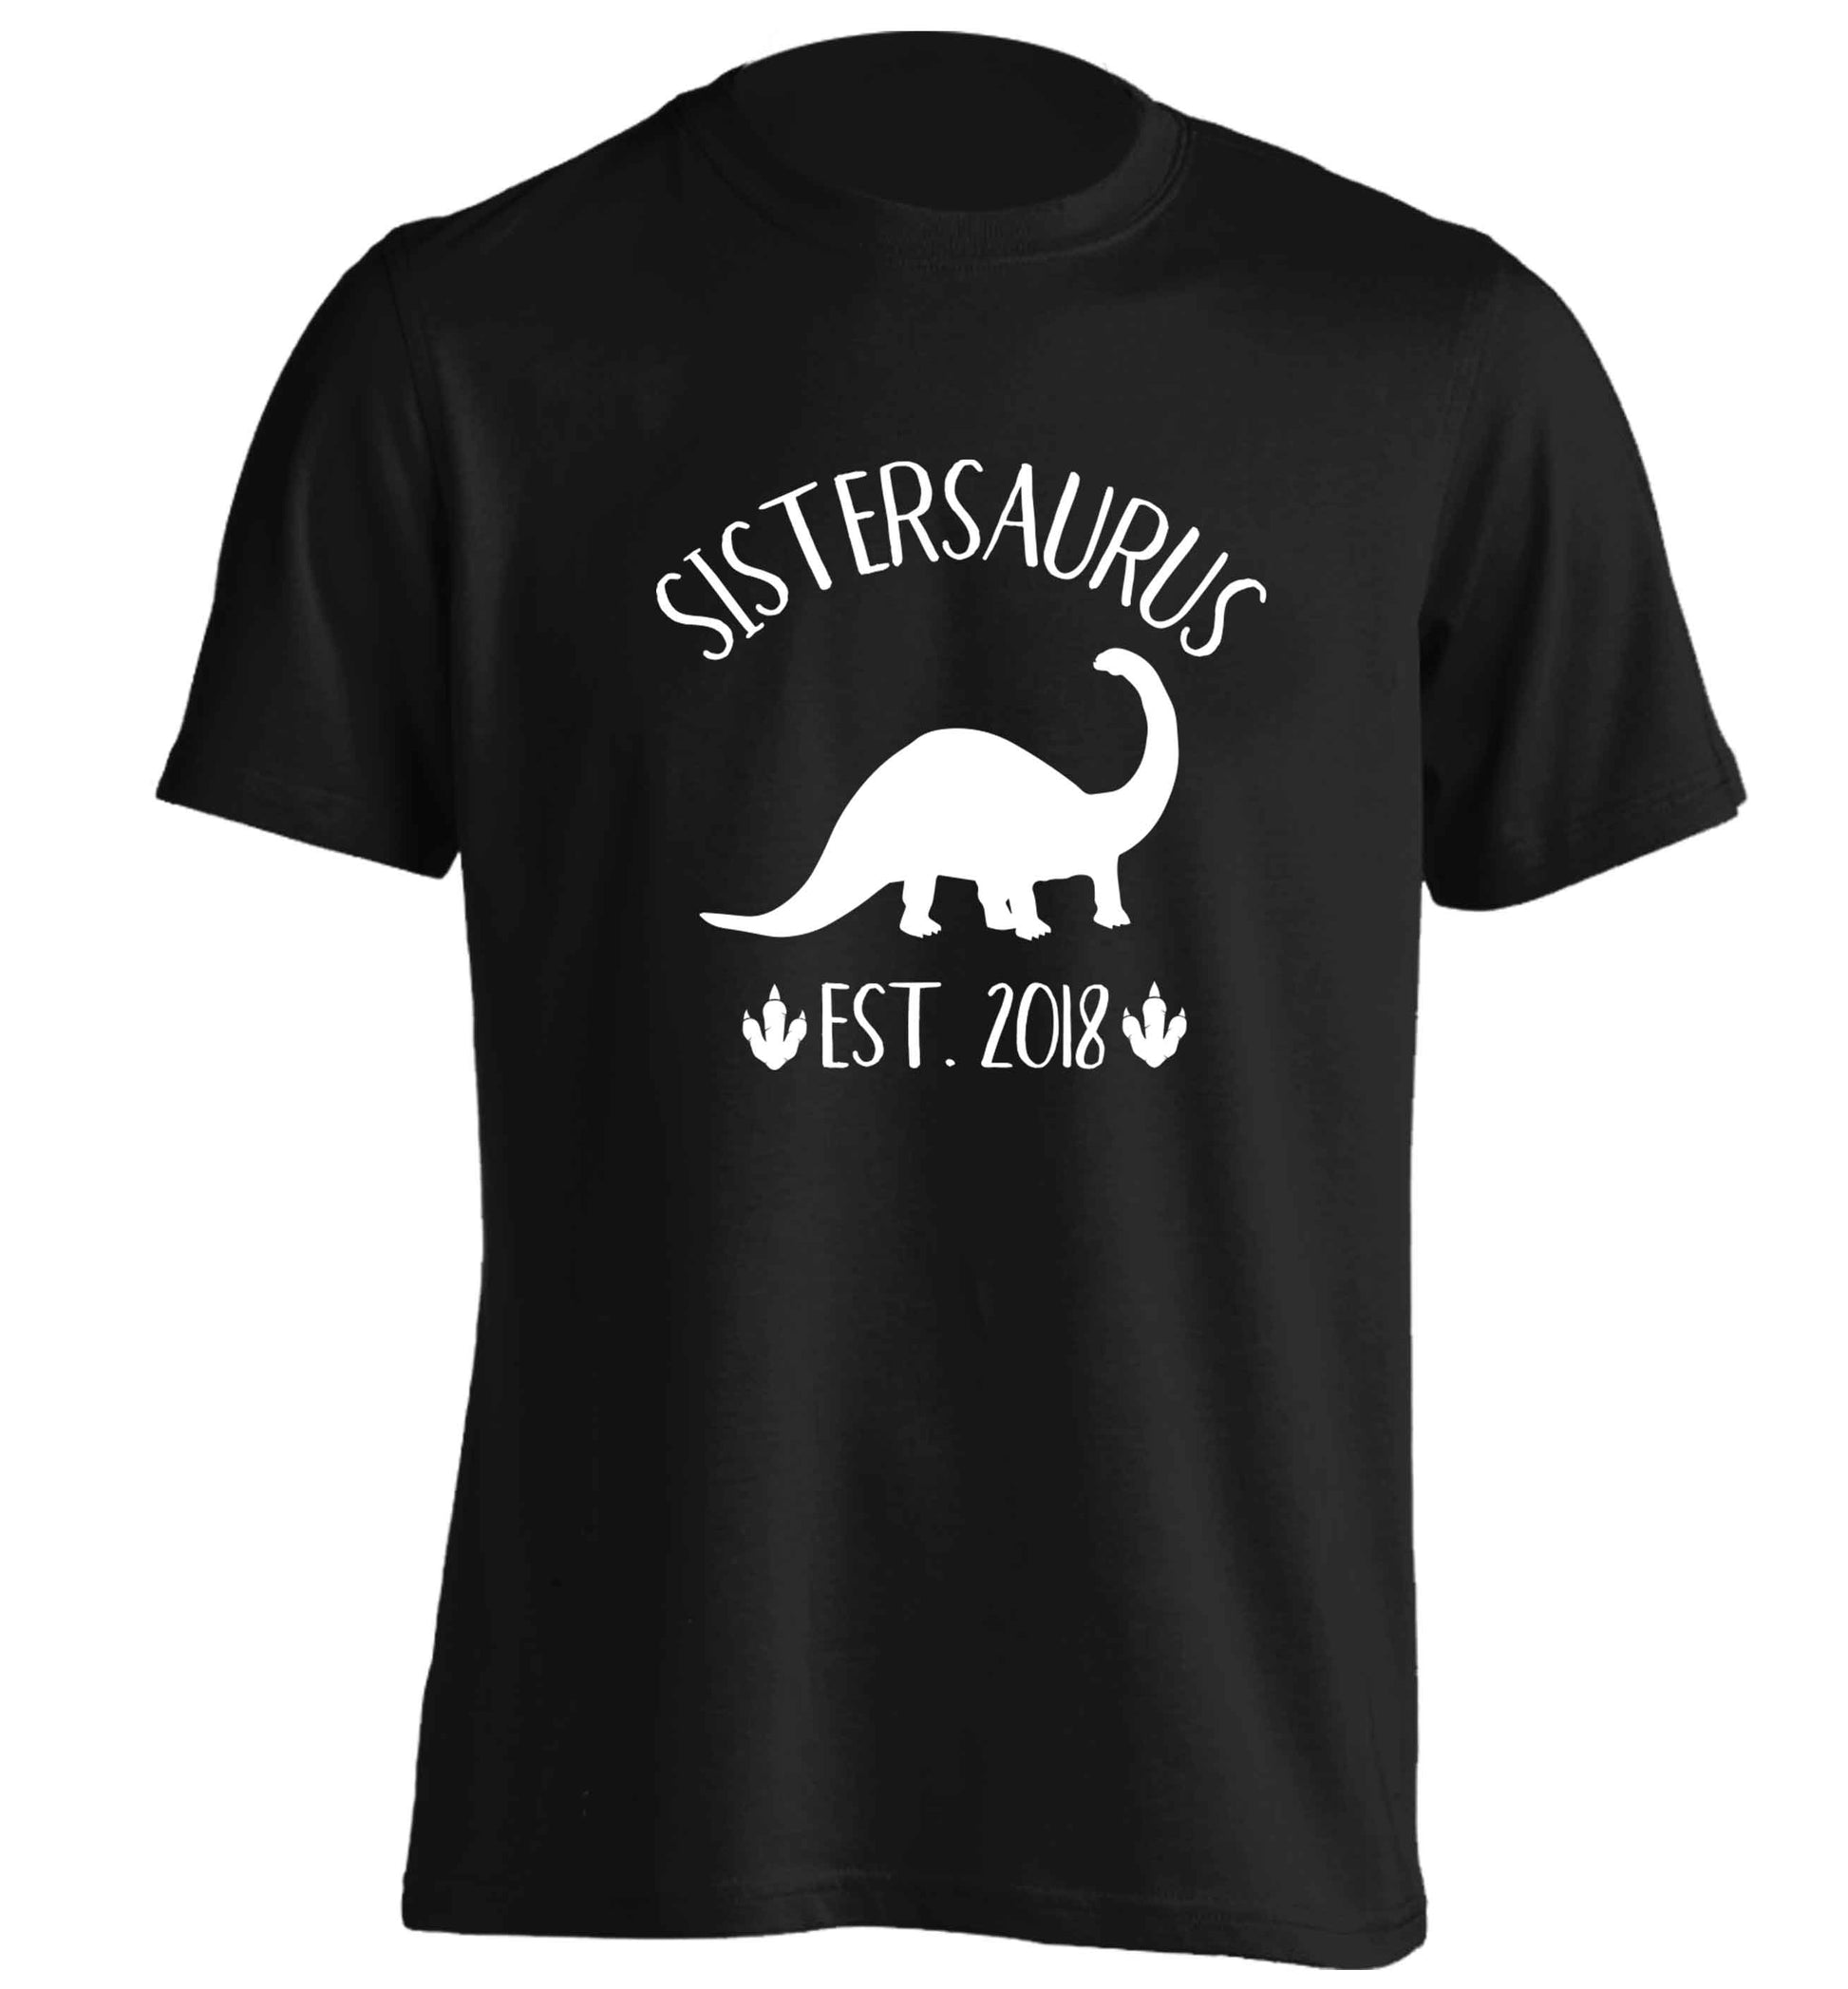 Personalised sistersaurus since (custom date) adults unisex black Tshirt 2XL